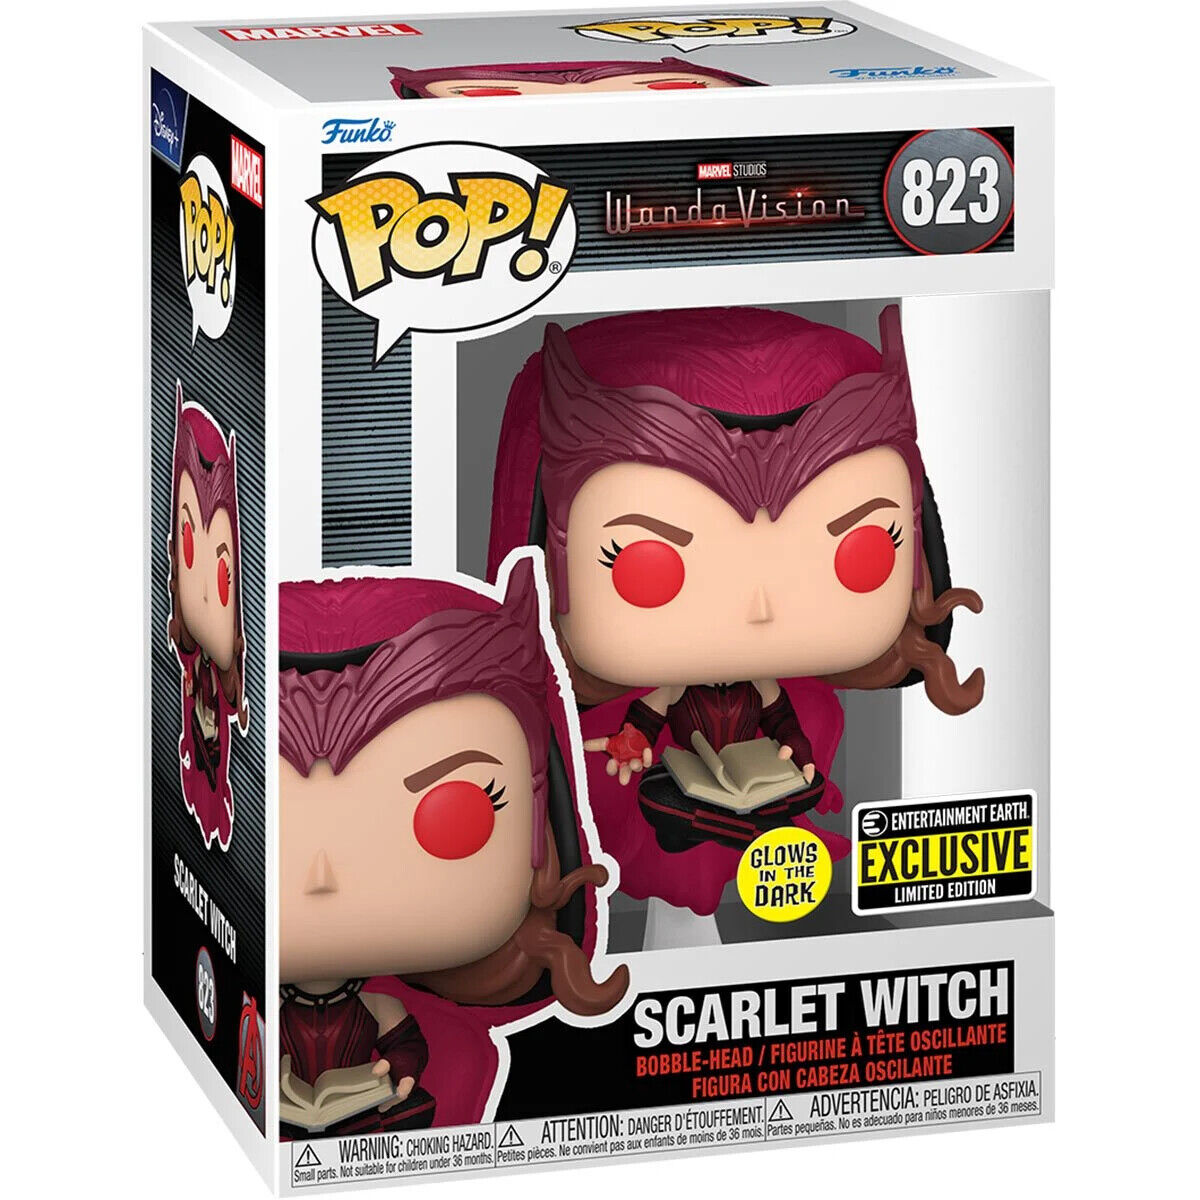 Exclusive WandaVision Scarlet Witch GITD Funko Pop Figure #823